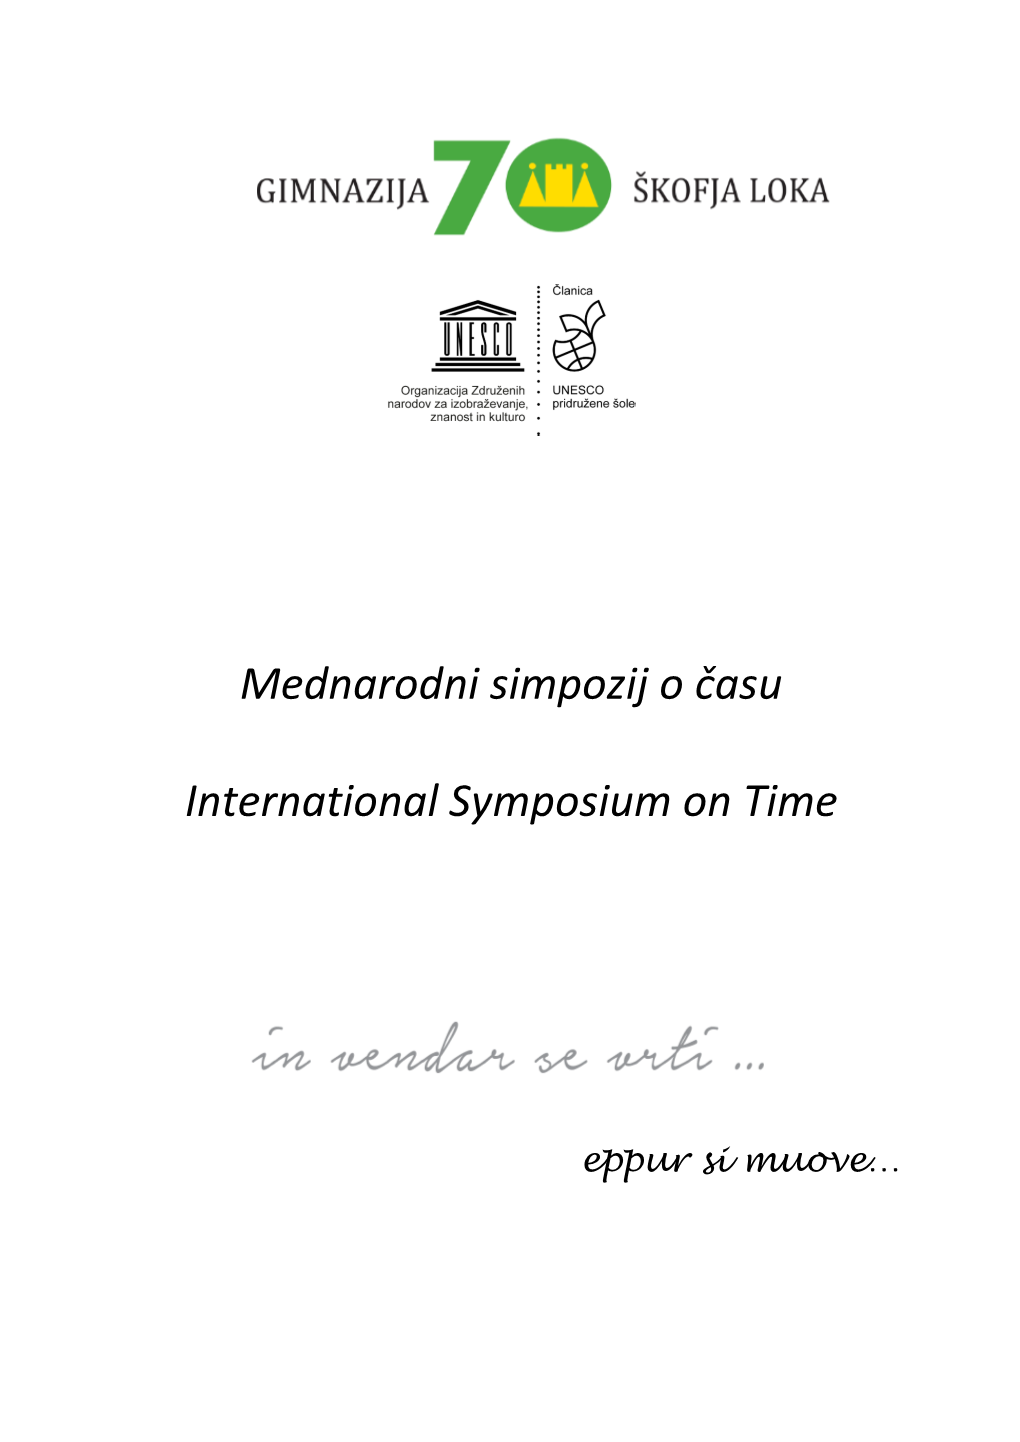 International Symposium on Time